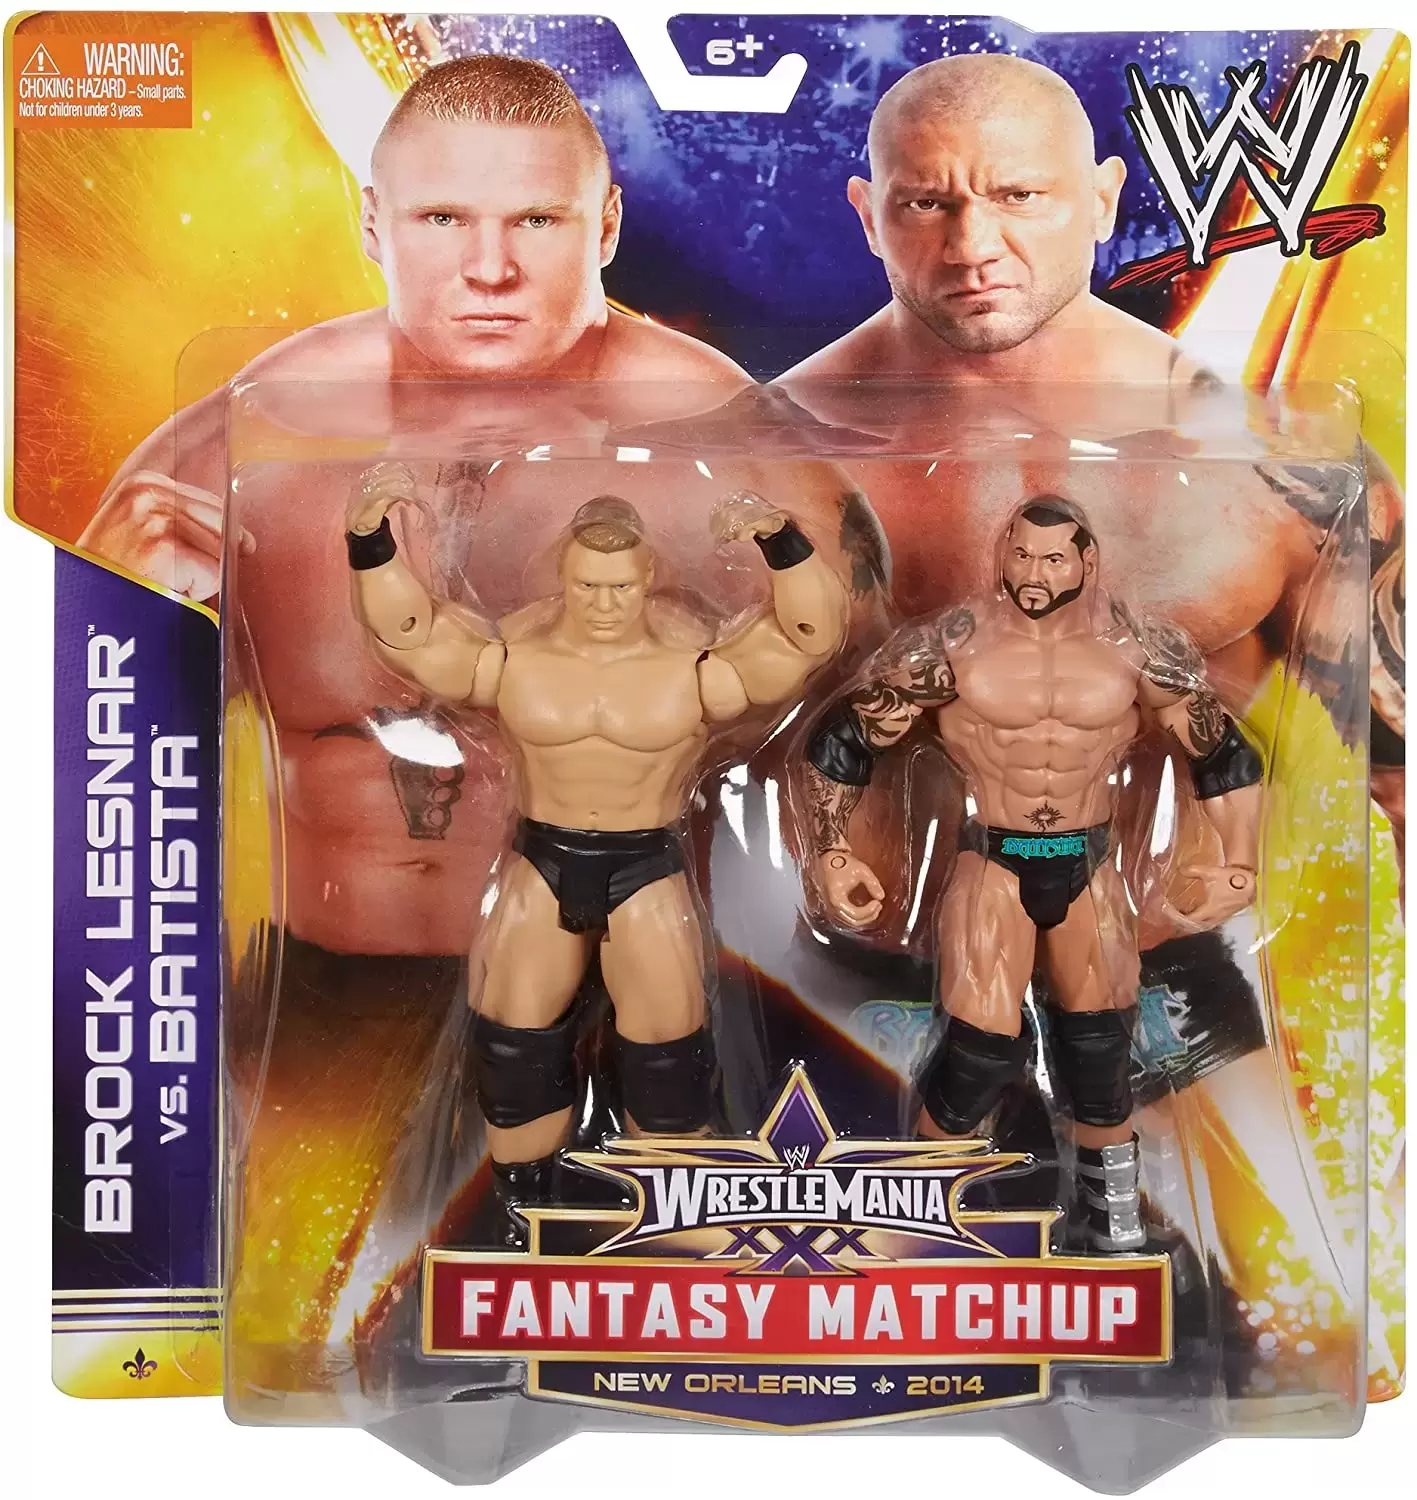 Mattel WWE - WrestleMania Fantasy MatchUp - Brock Lesnar vs. Batista - New Orleans 2014